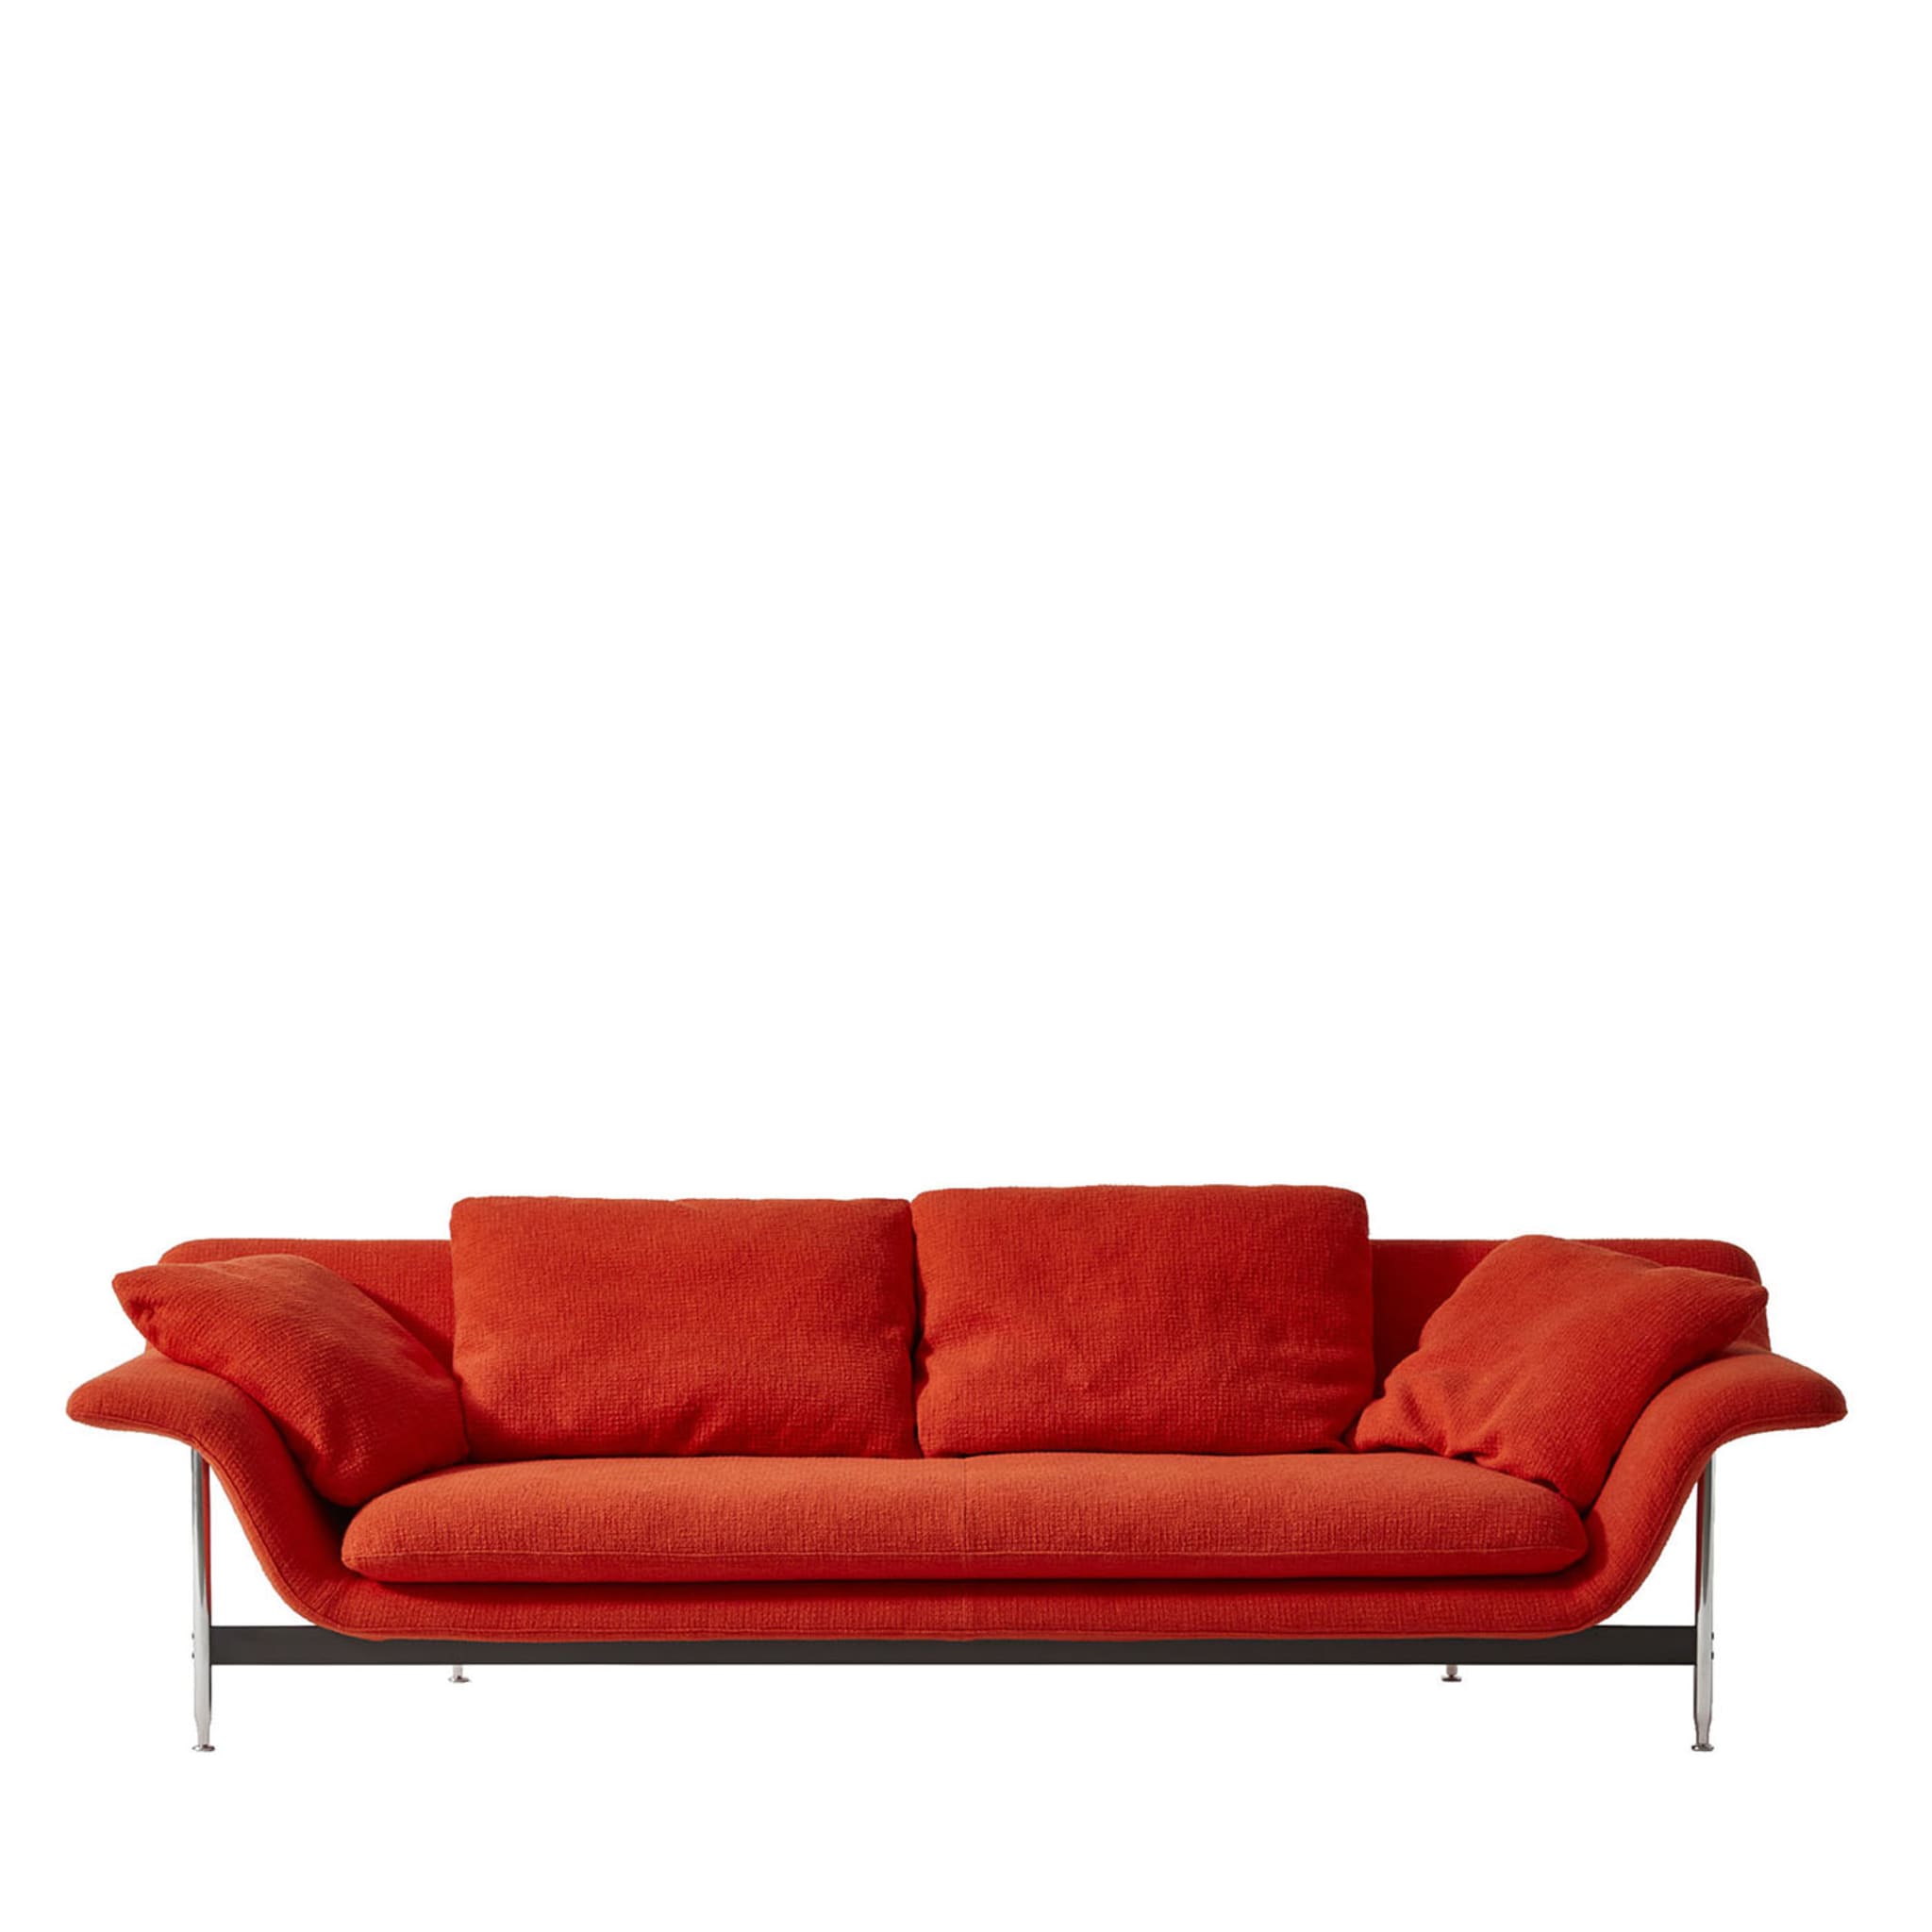 Esosoft 3-Seater Orange Sofa by Antonio Citterio - Main view